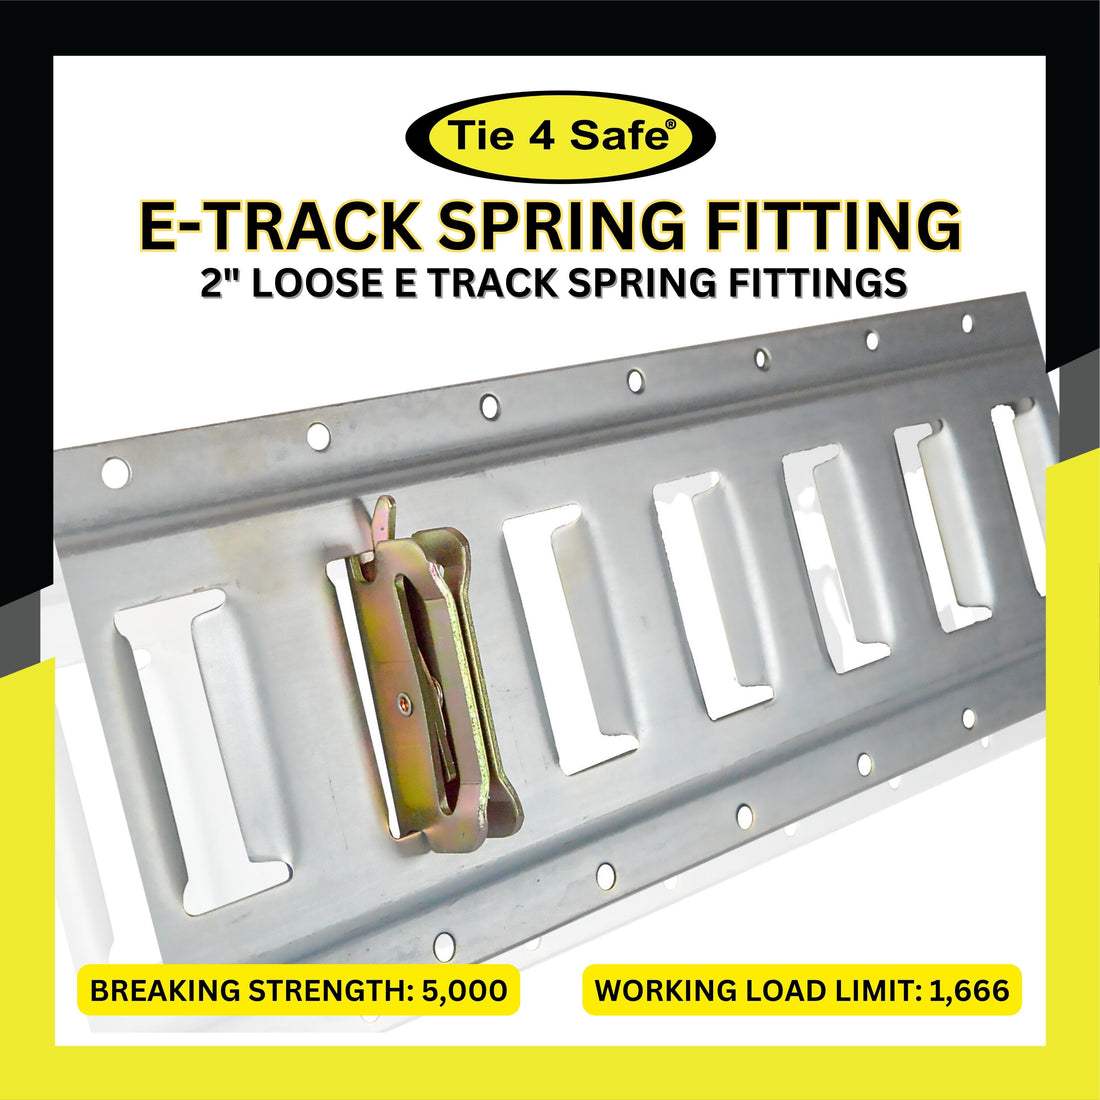 E-Track Spring Fitting